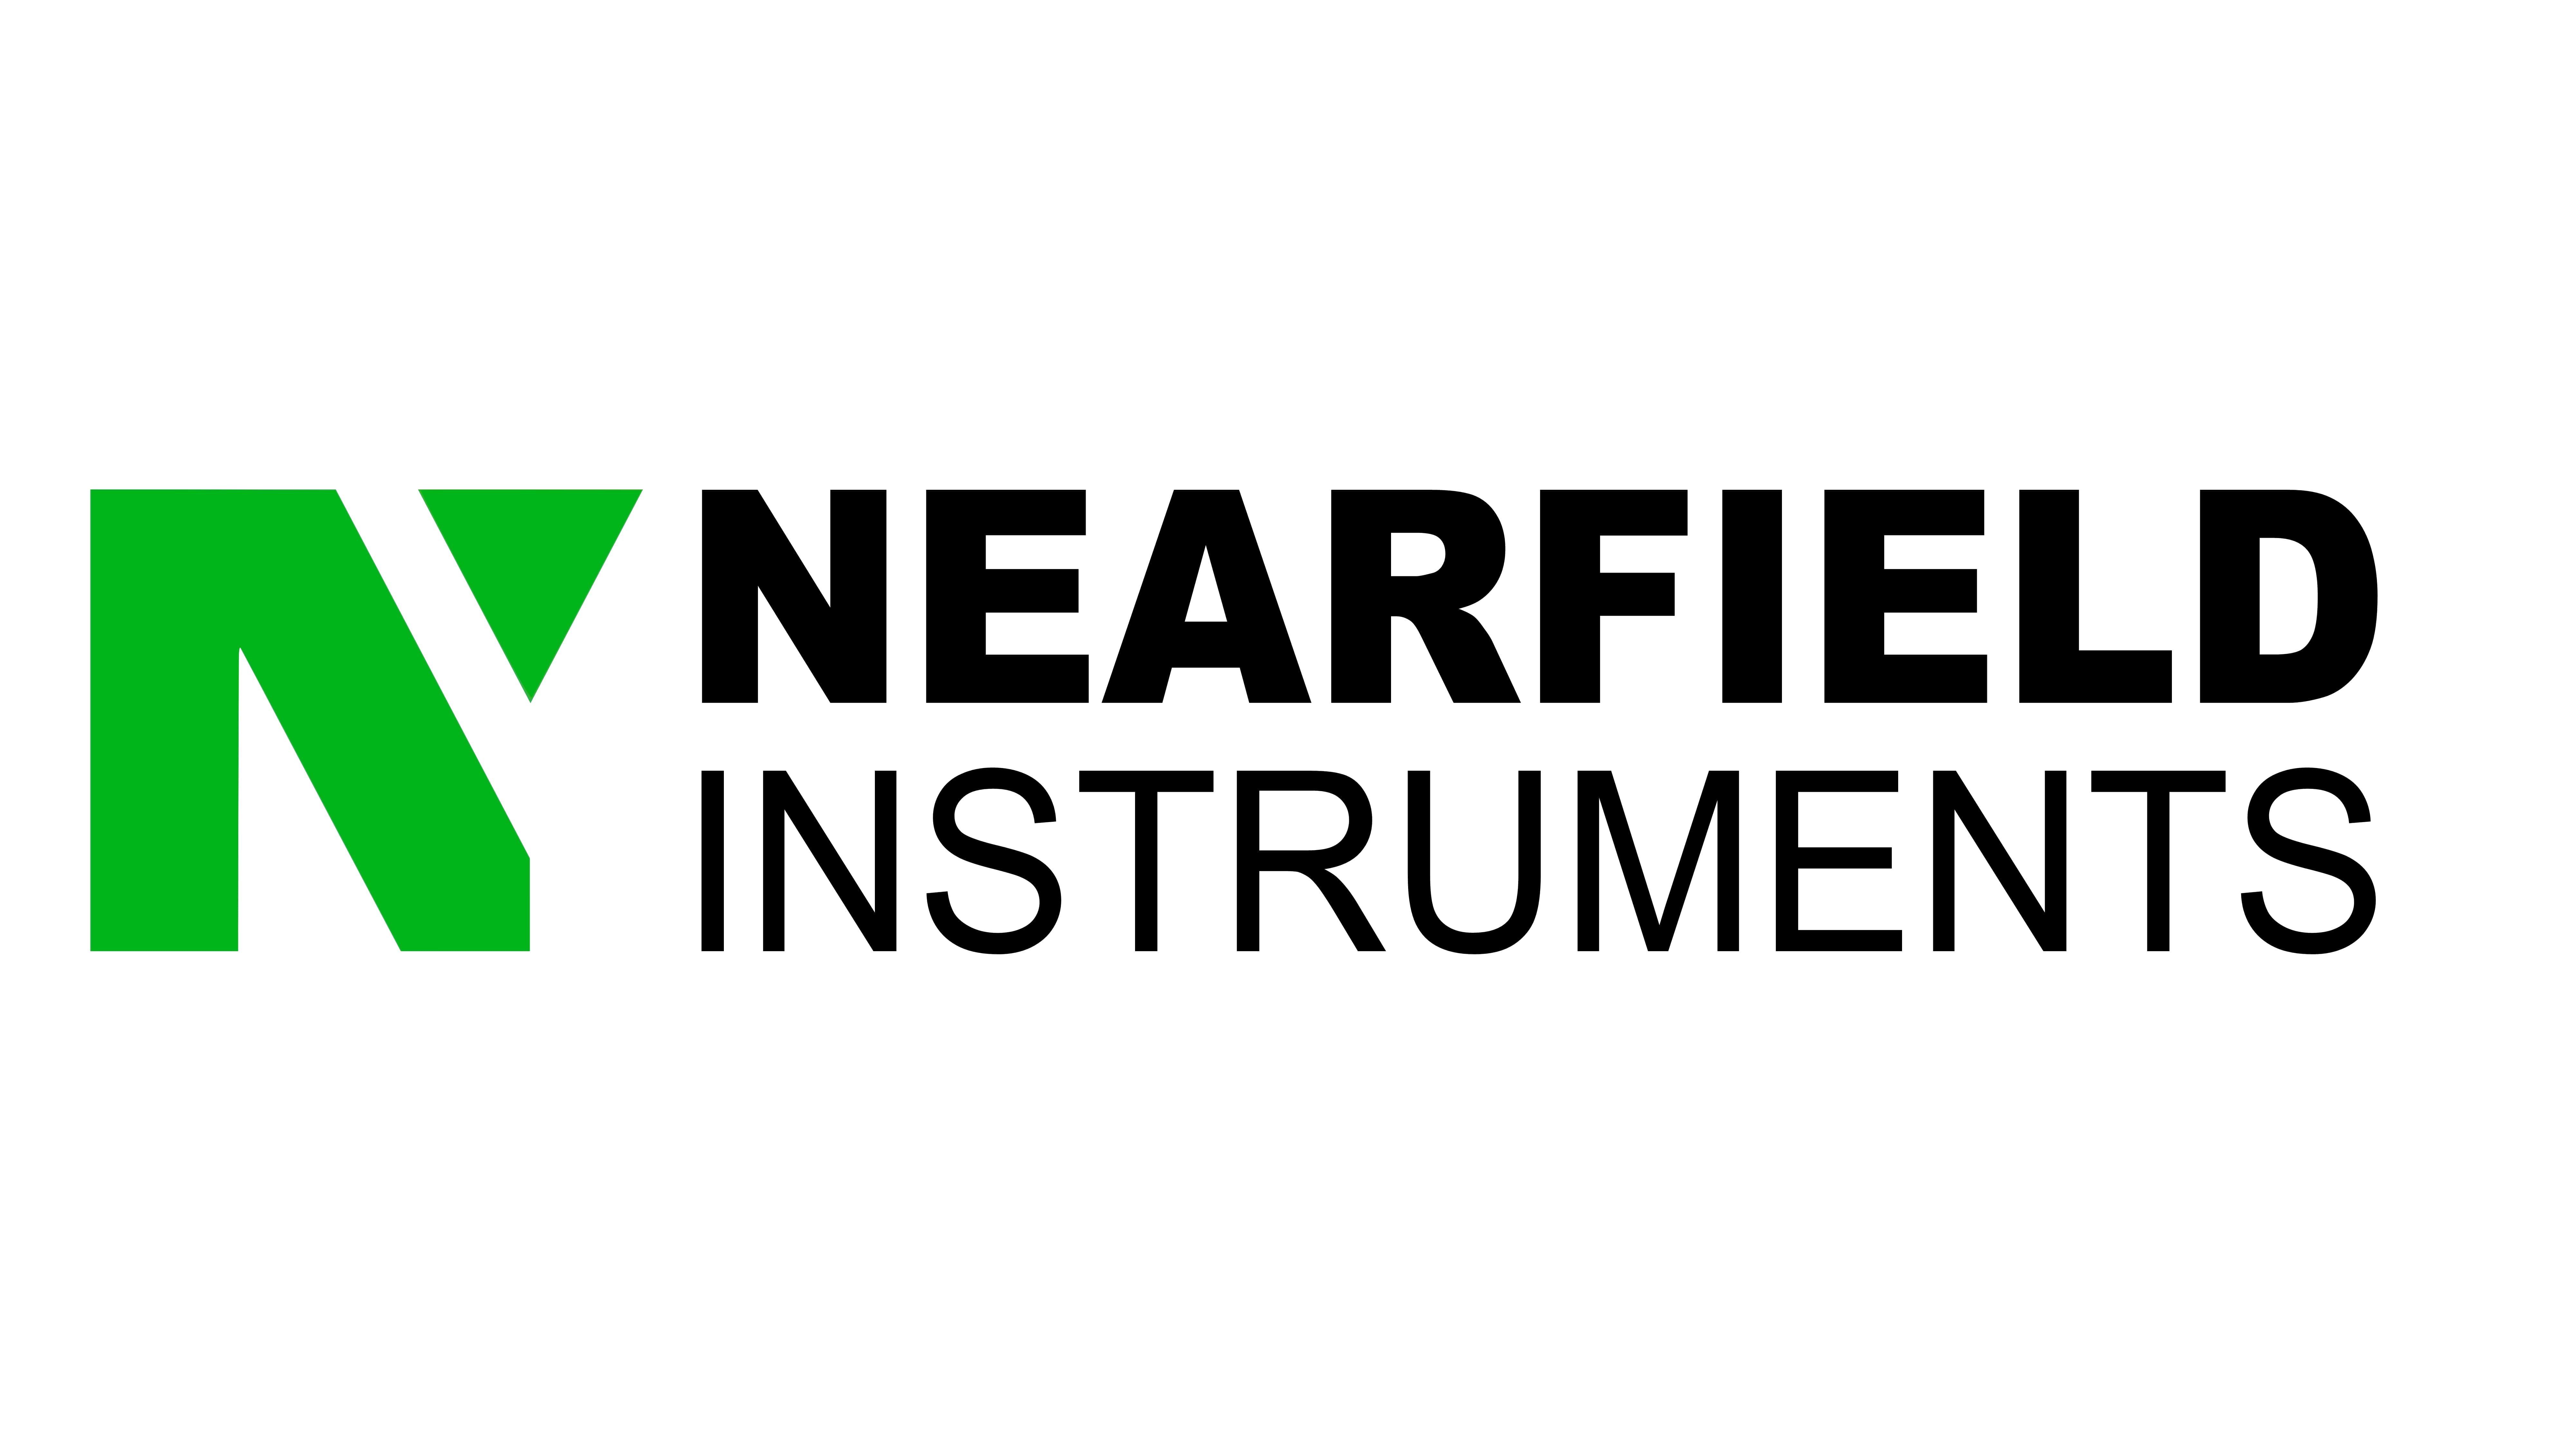 Nearfield Instruments